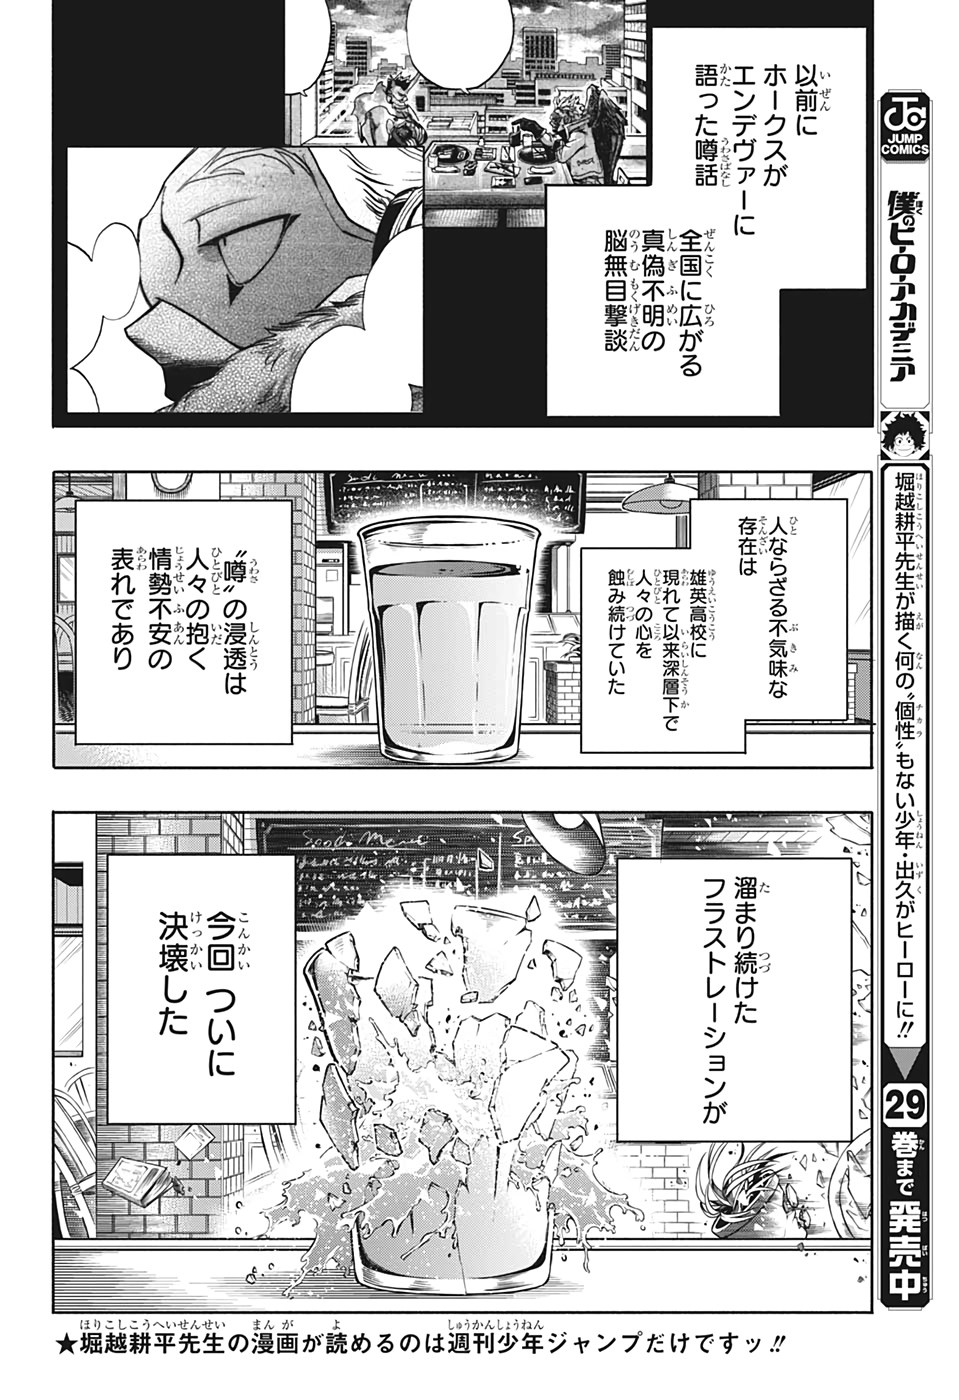 Boku no Hero Academia - Chapter 300 - Page 2